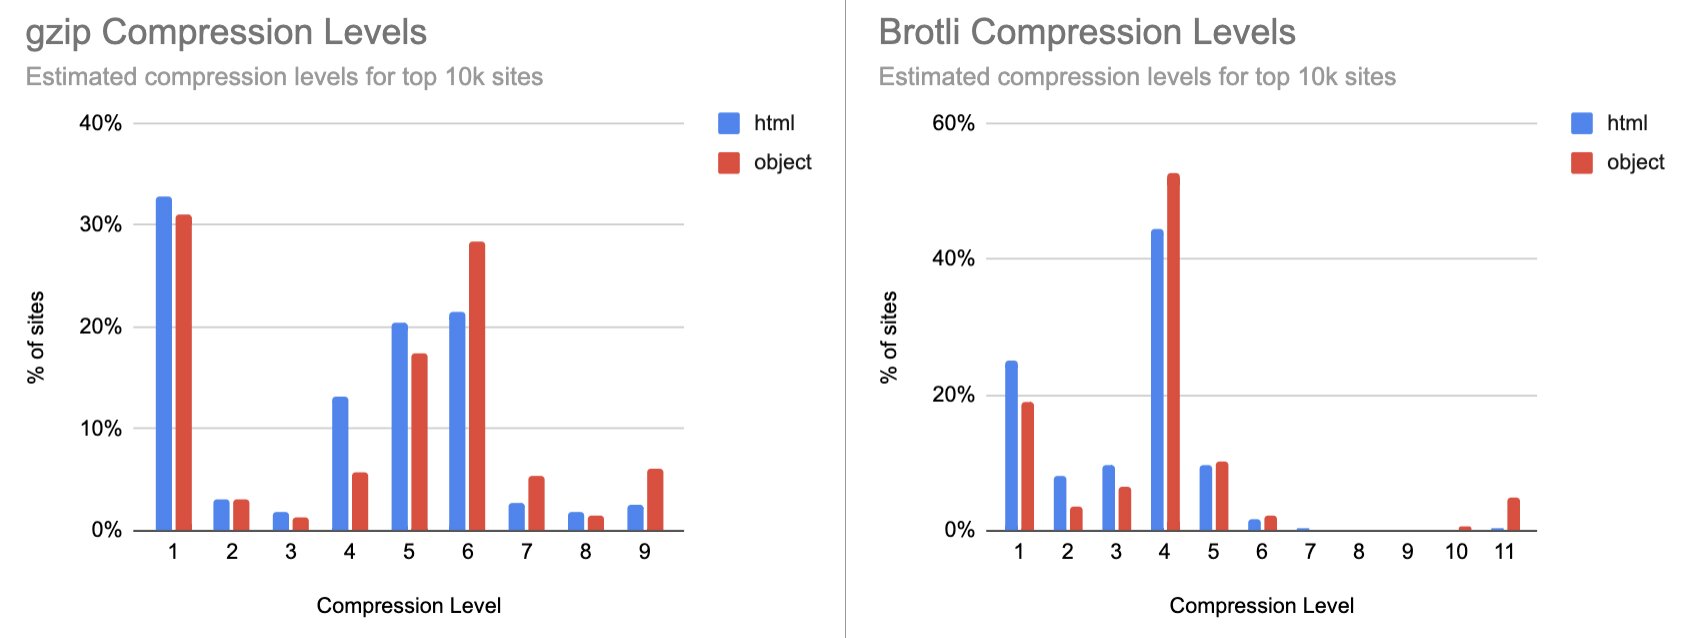 gzip and Brotli compression levels